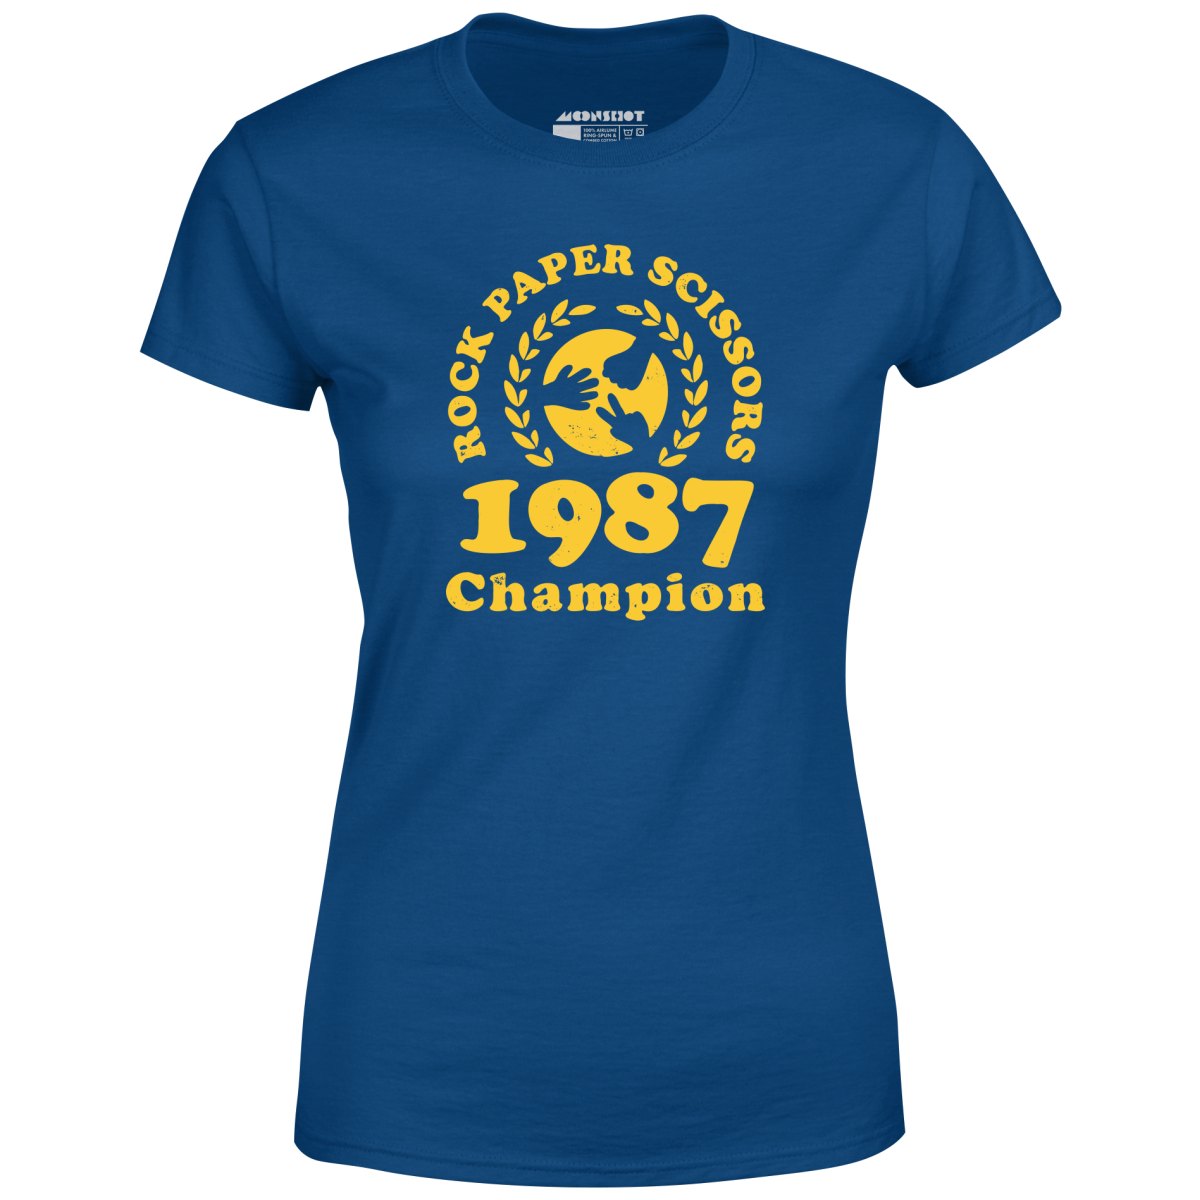 Rock Paper Scissors Champion - Women's T-Shirt